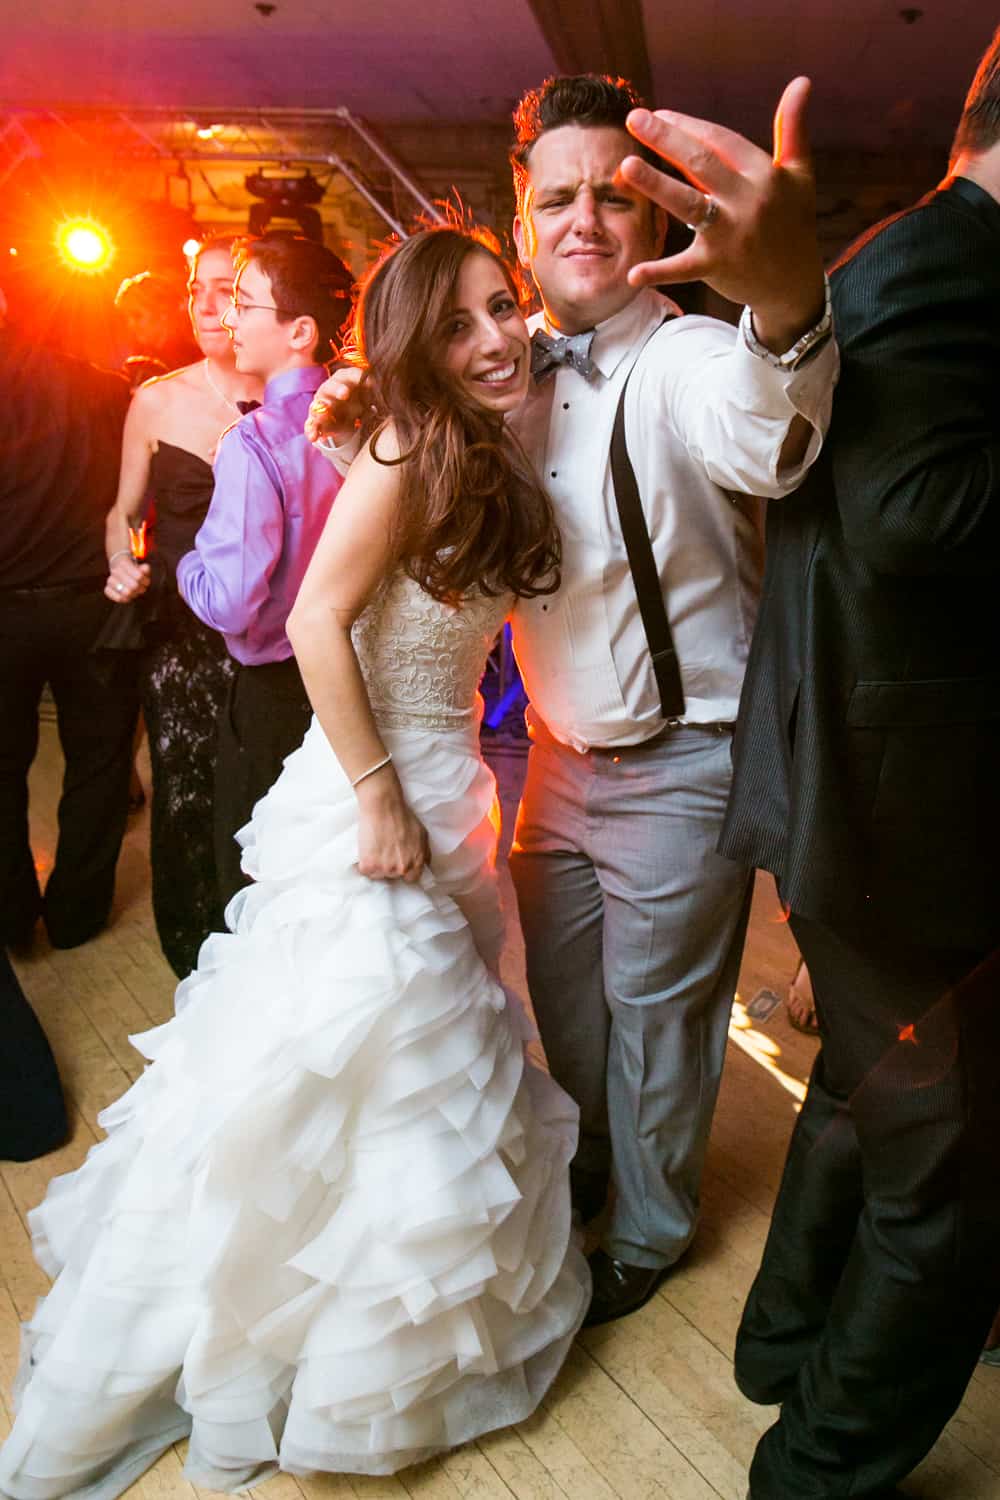 Bride and groom gesturing to camera during Manor wedding reception